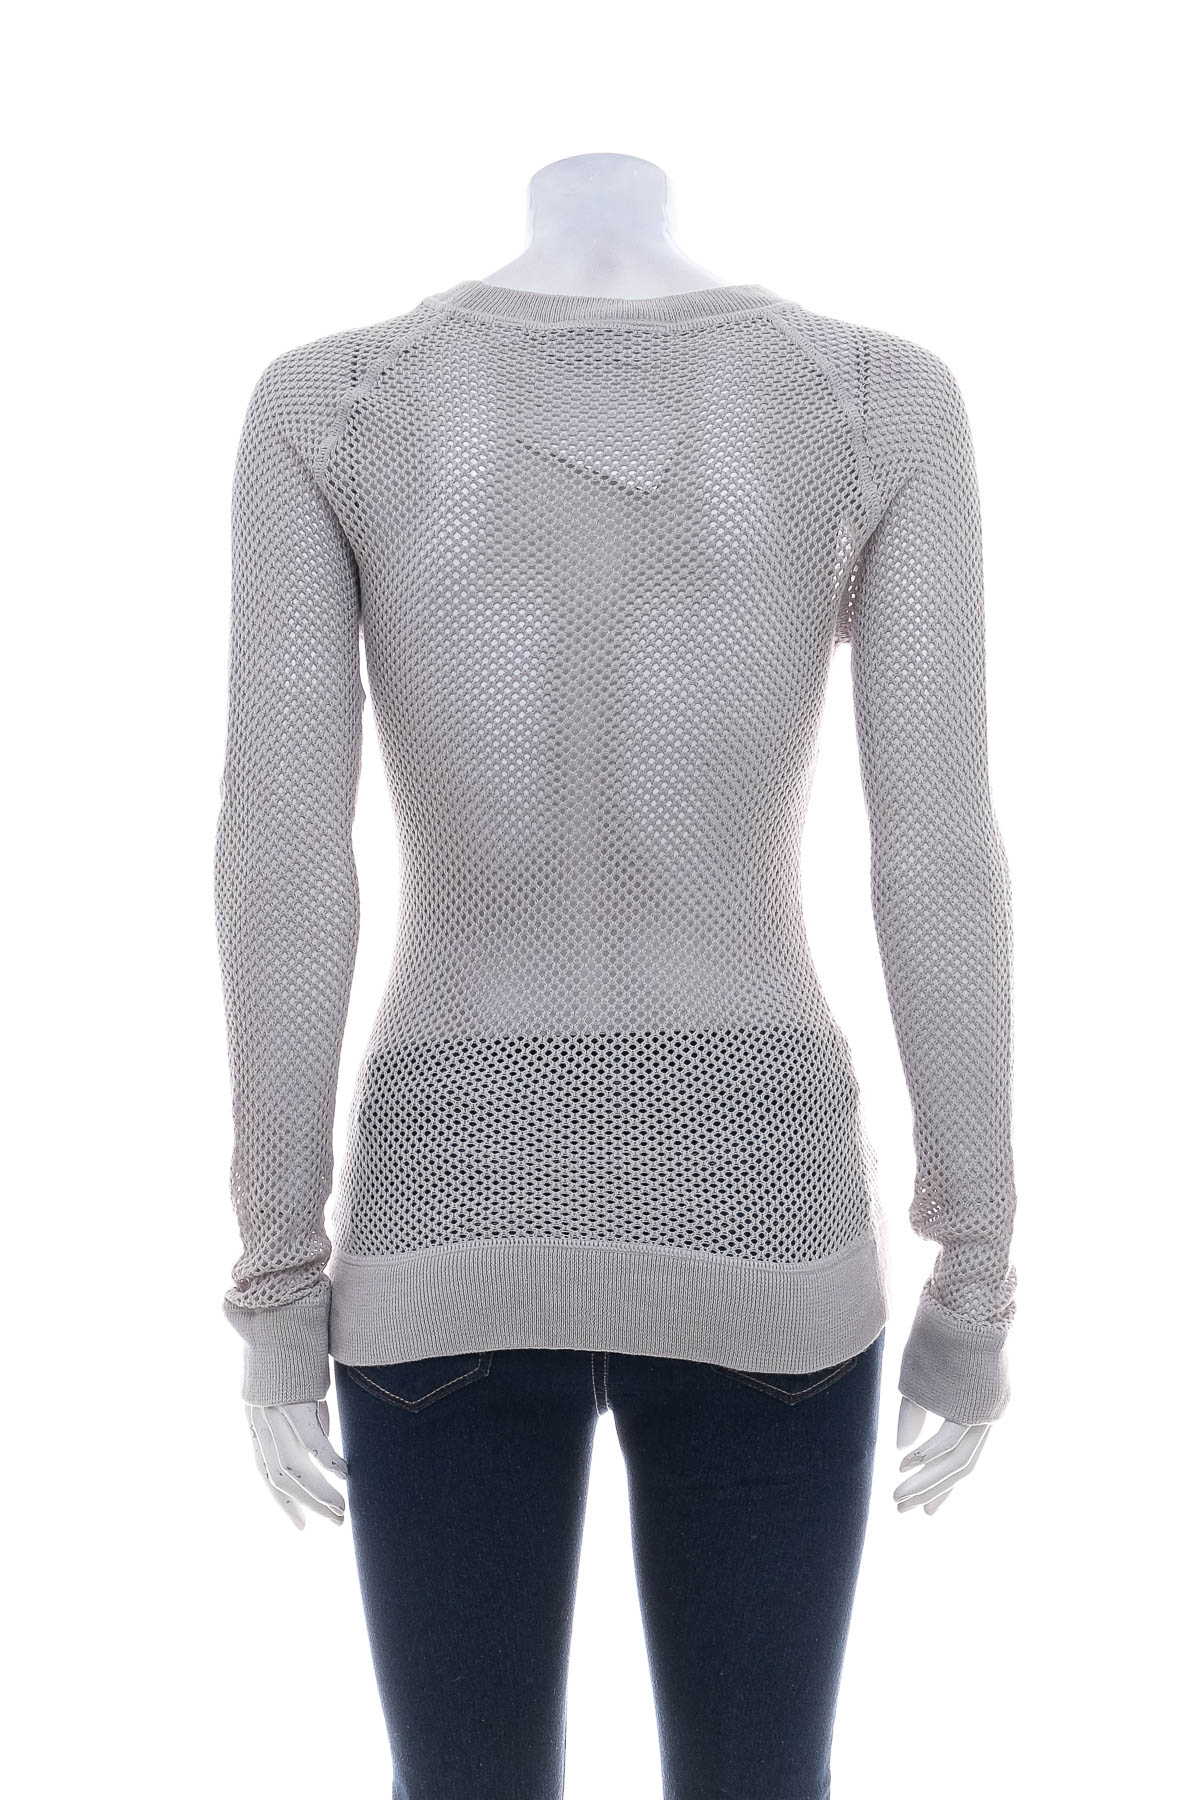 Women's sweater - Urbane - 1